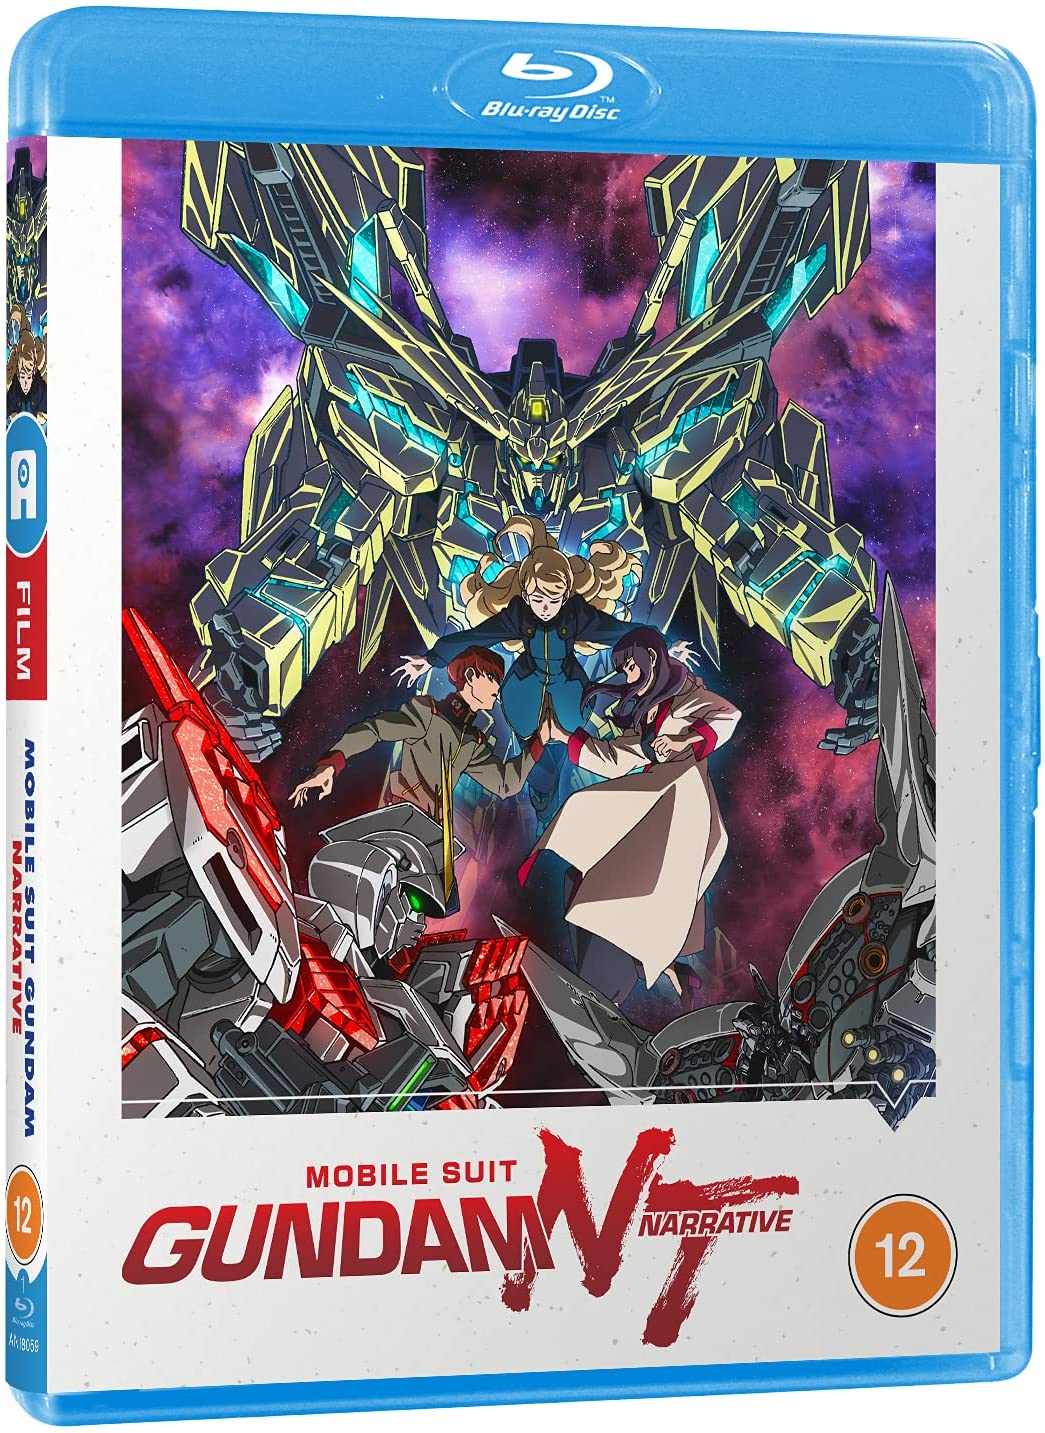 Gundam Narrative – Action/Science-Fiction [BLu-ray]